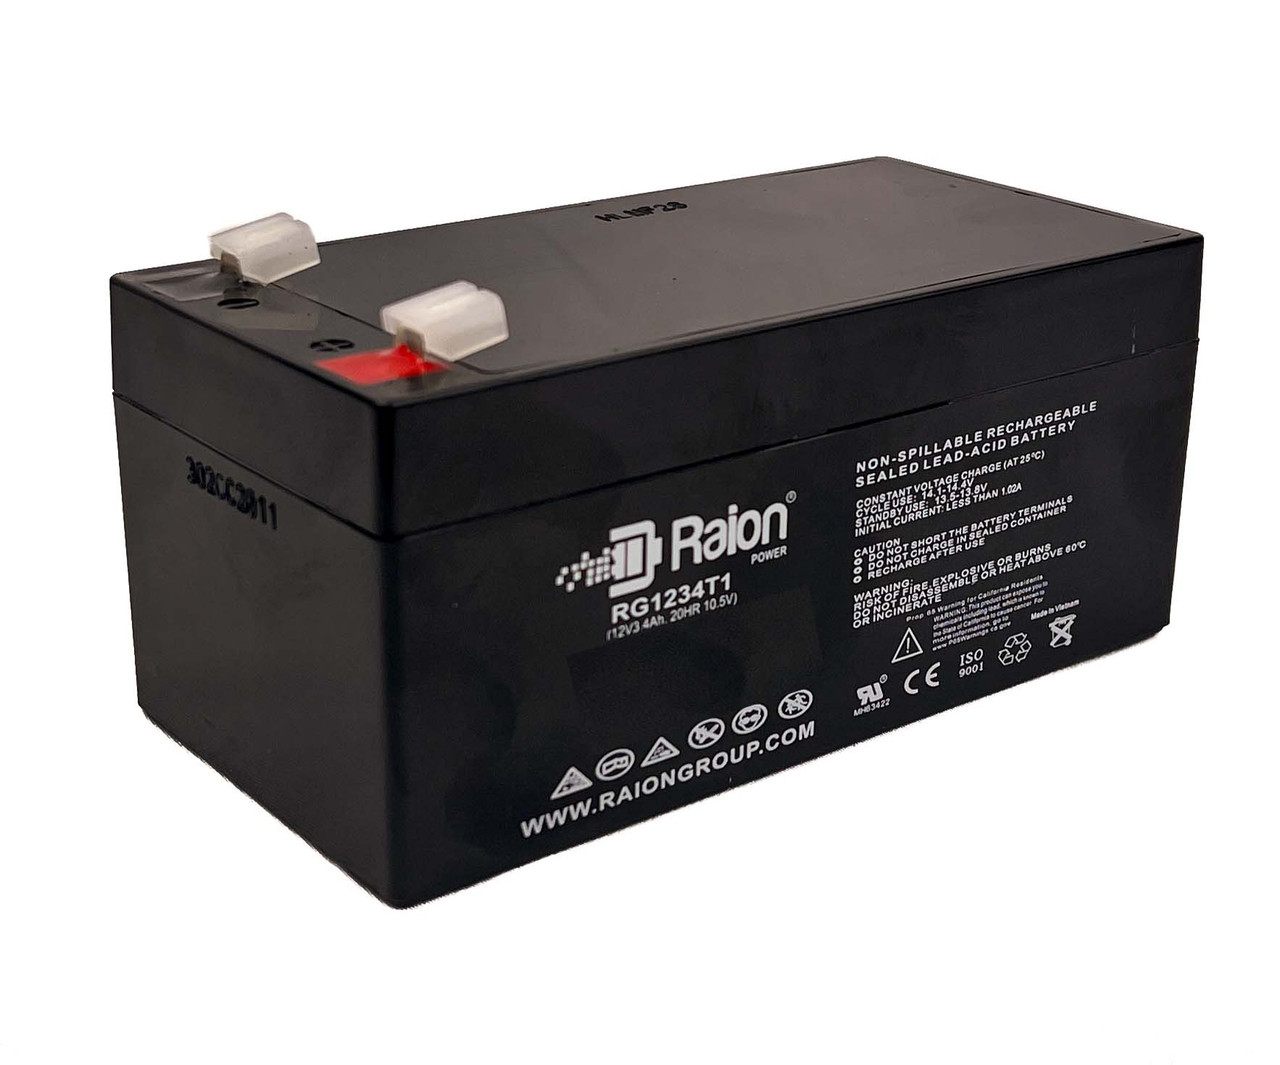 Raion Power 12V 3.4Ah Non-Spillable Replacement Battery for Delta DTM 12032